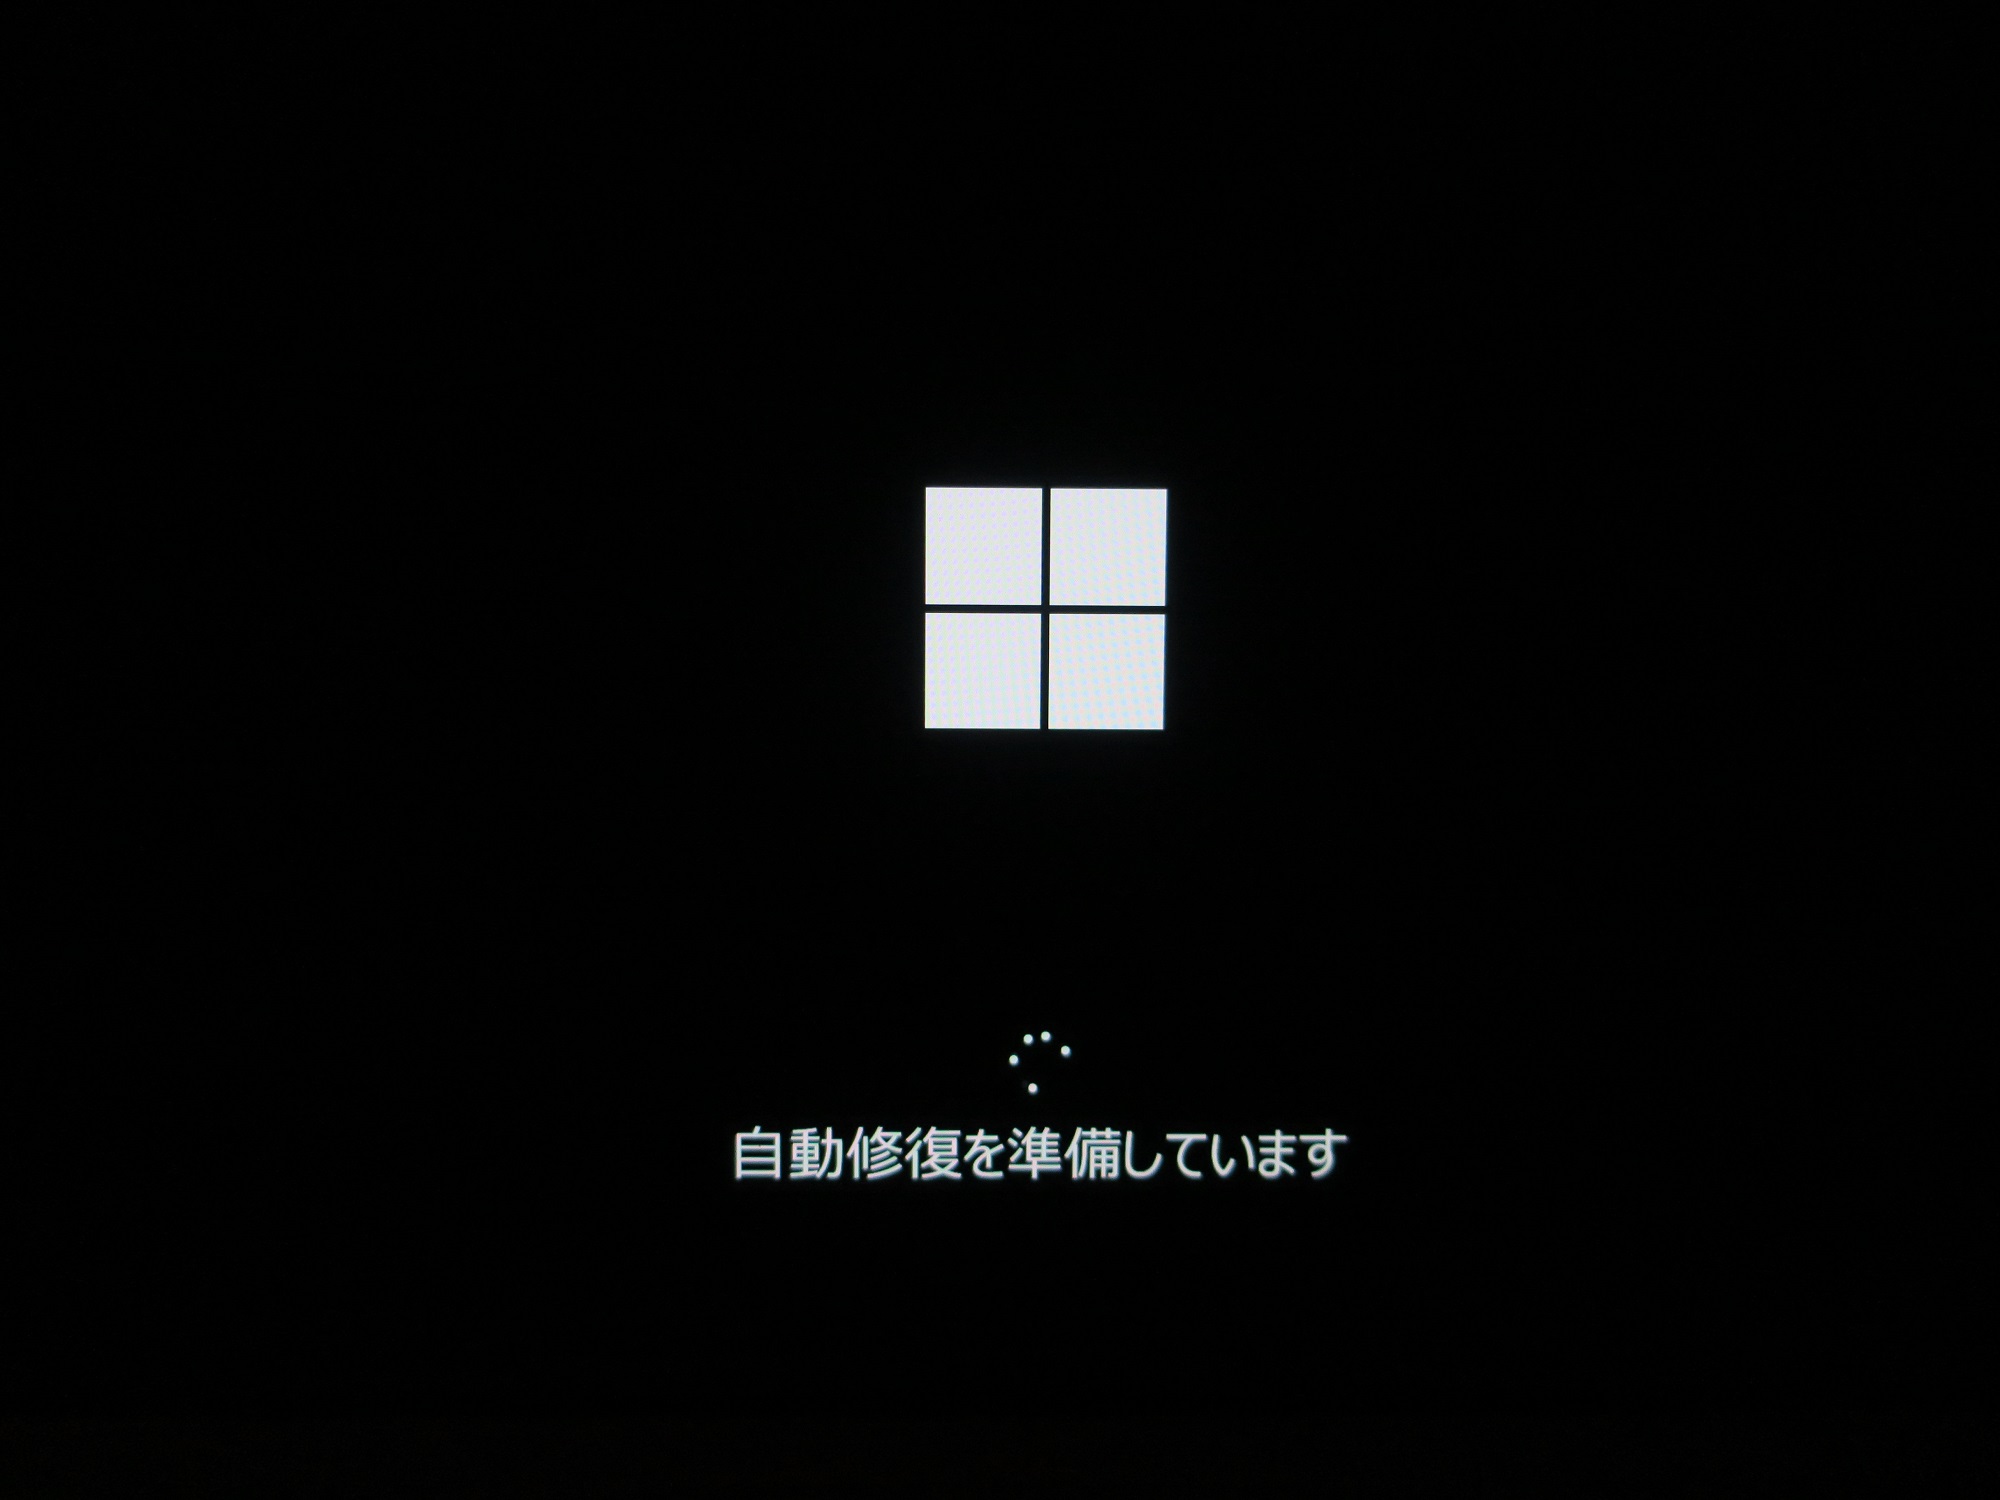 Windows 10 起動に失敗して、自動修復を試みているときに表示される画面